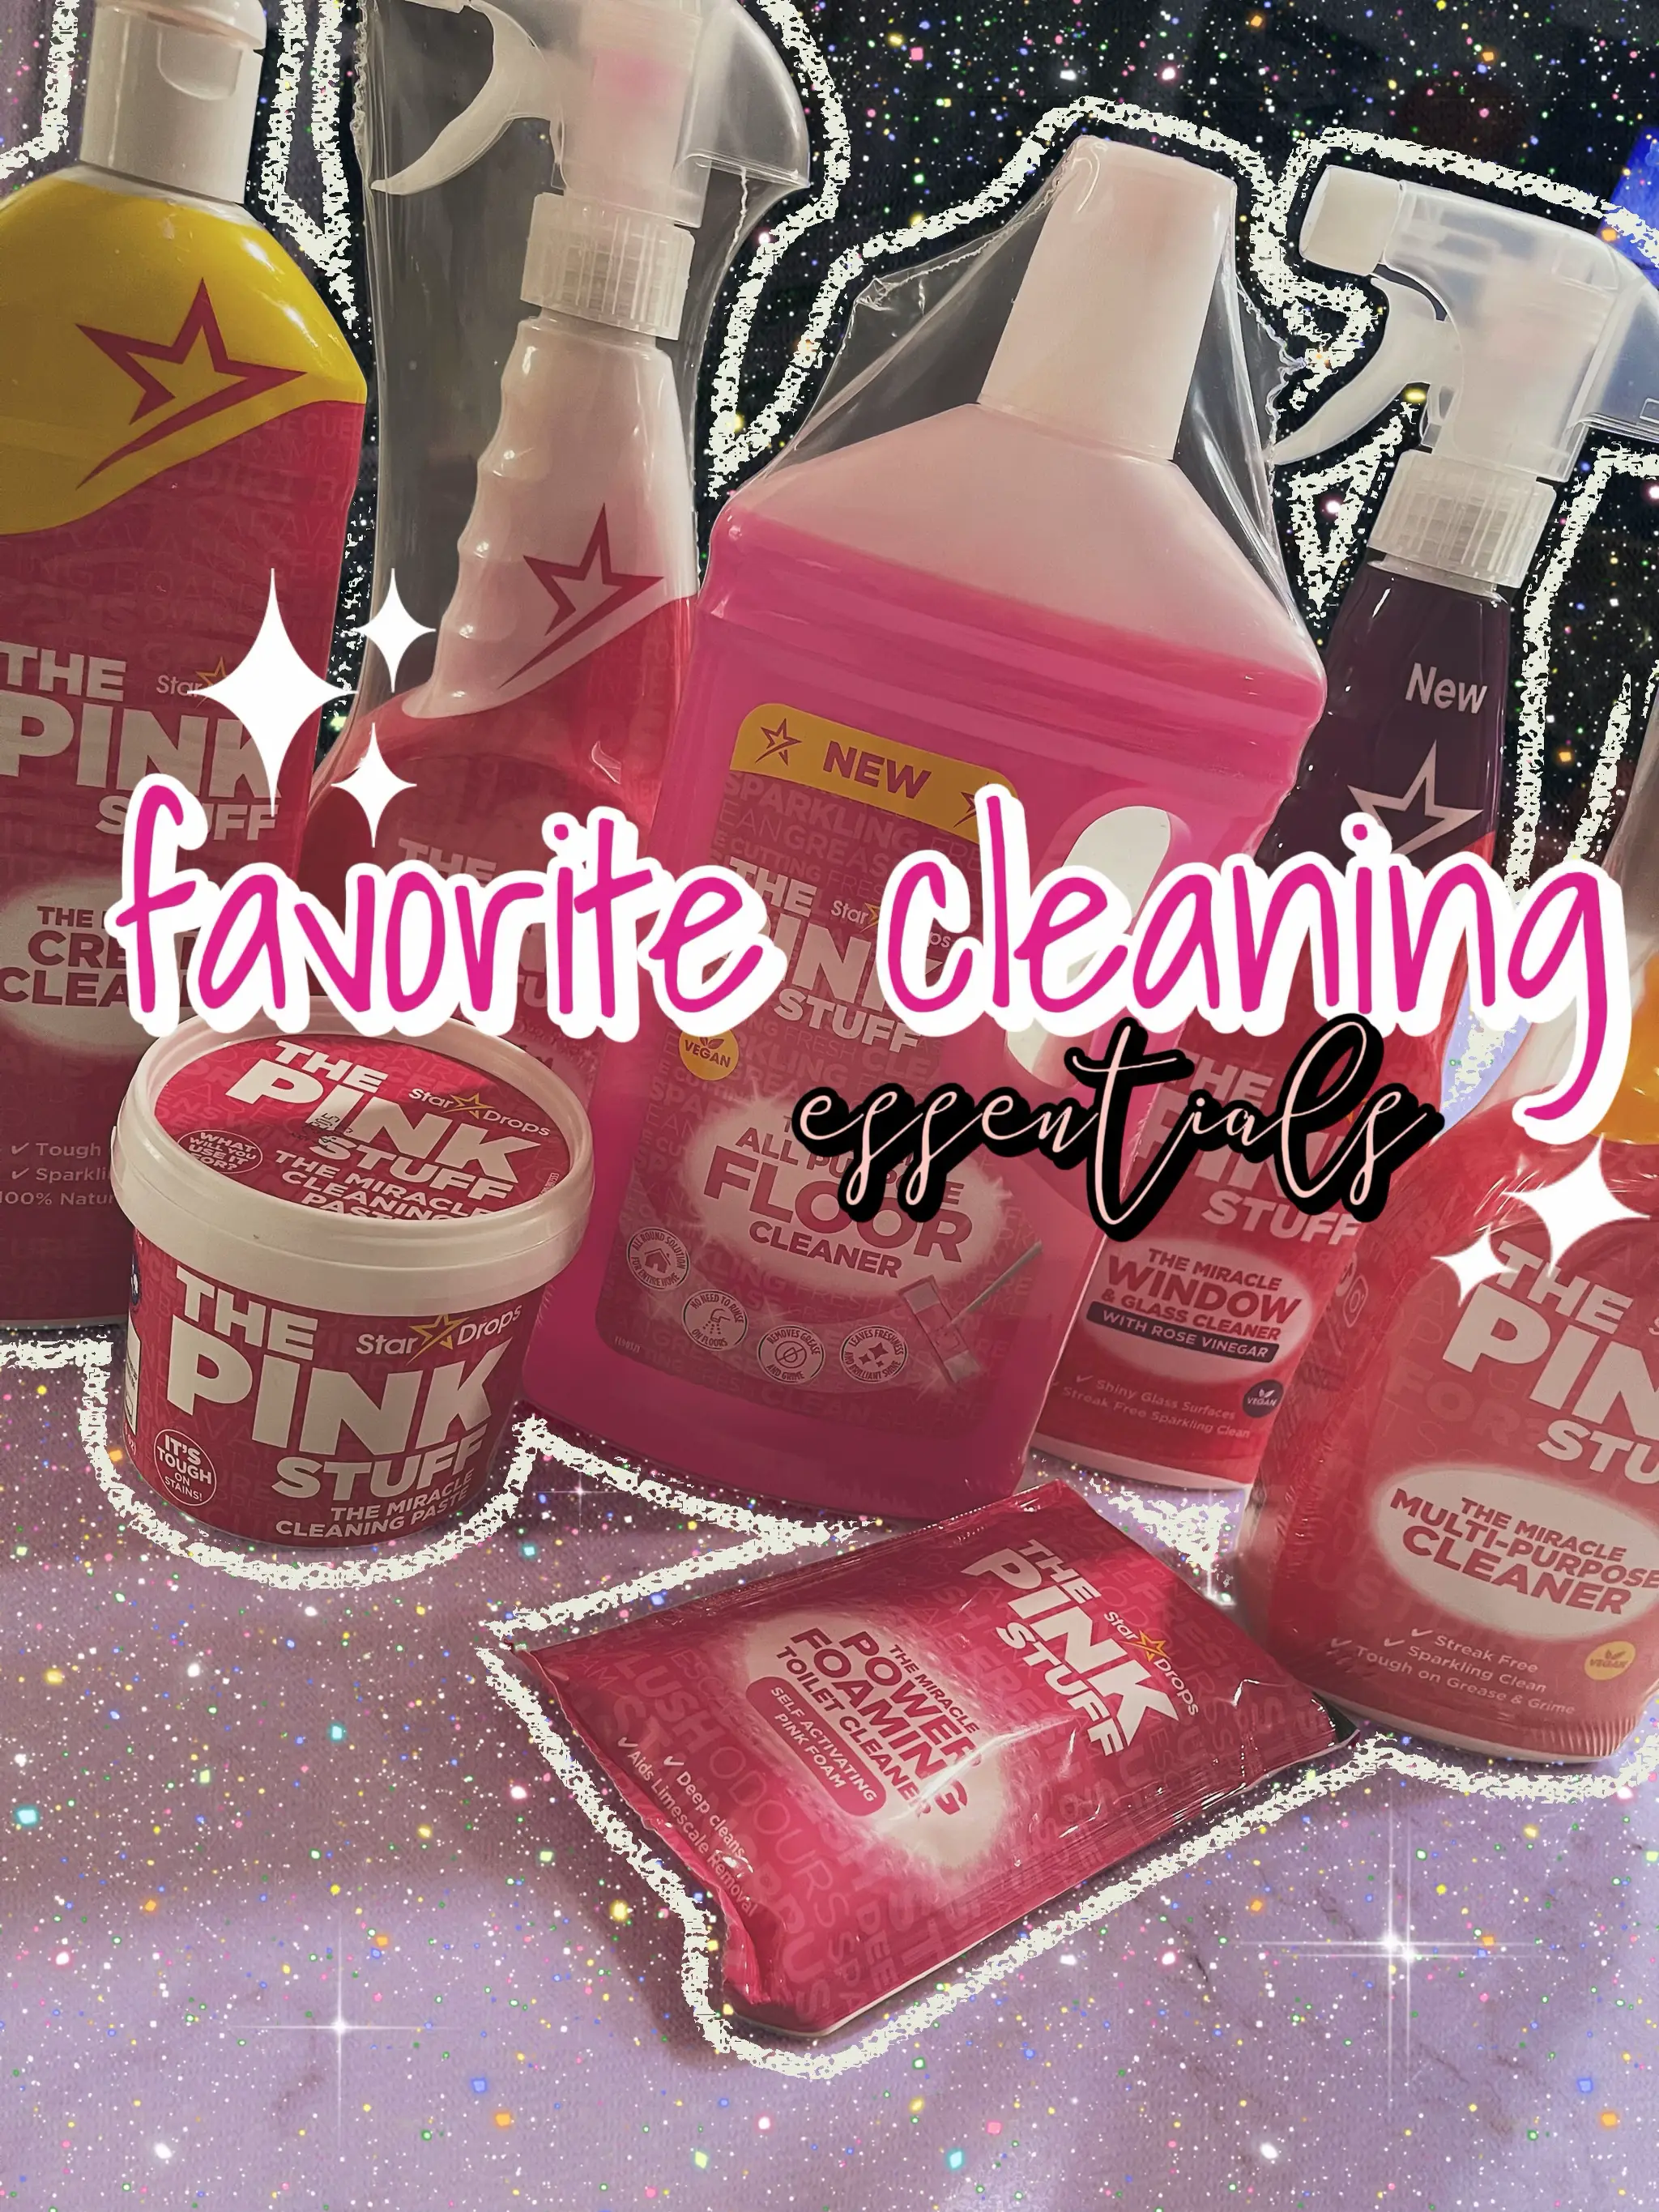 The Pink Stuff, Miracle All-Purpose Liquid Floor Cleaner, 33.8 fl. oz. 